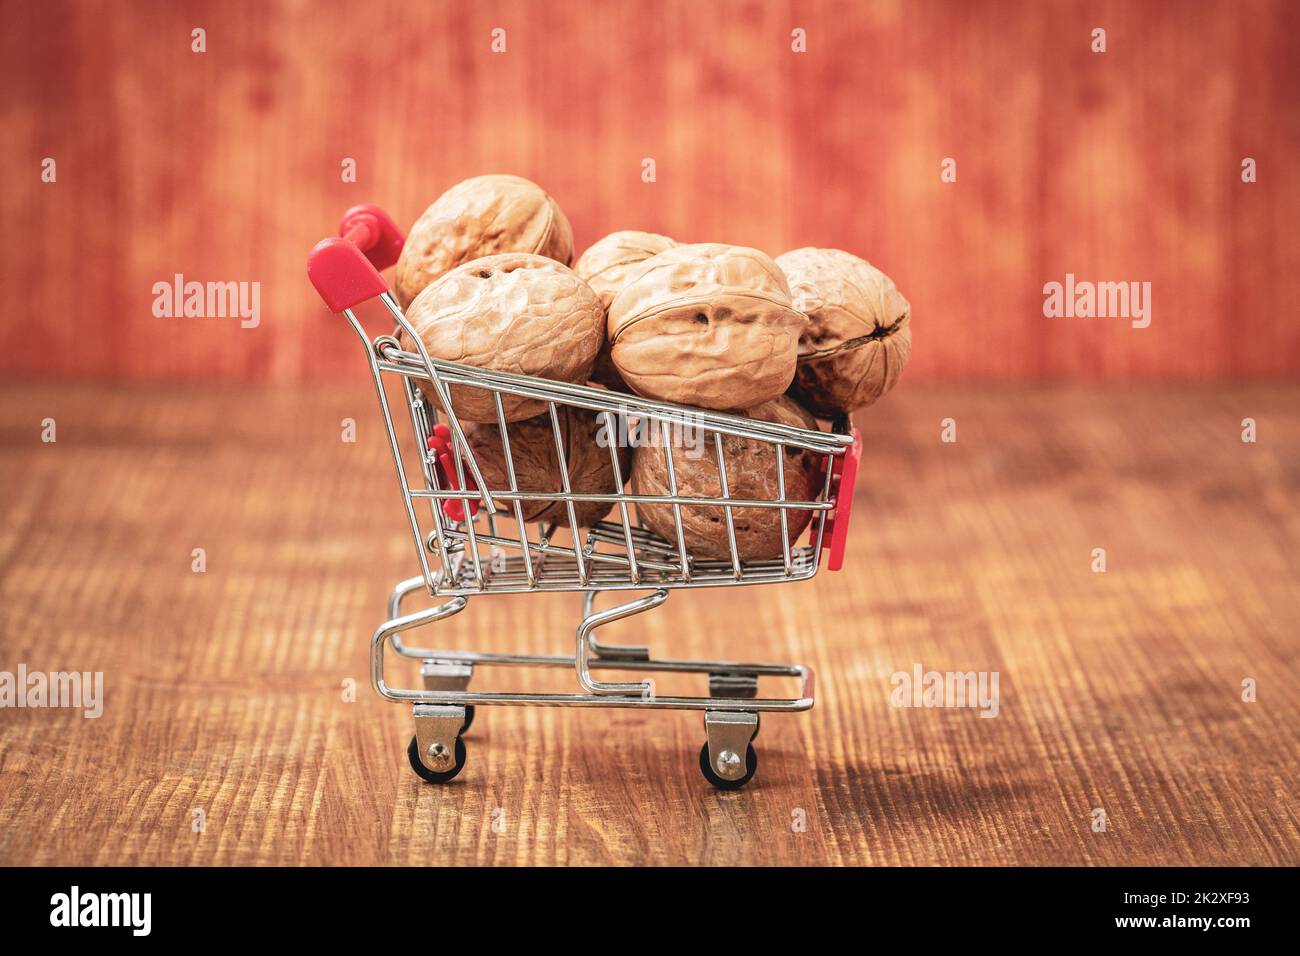 Shopping cart full of walnuts Stock Photo